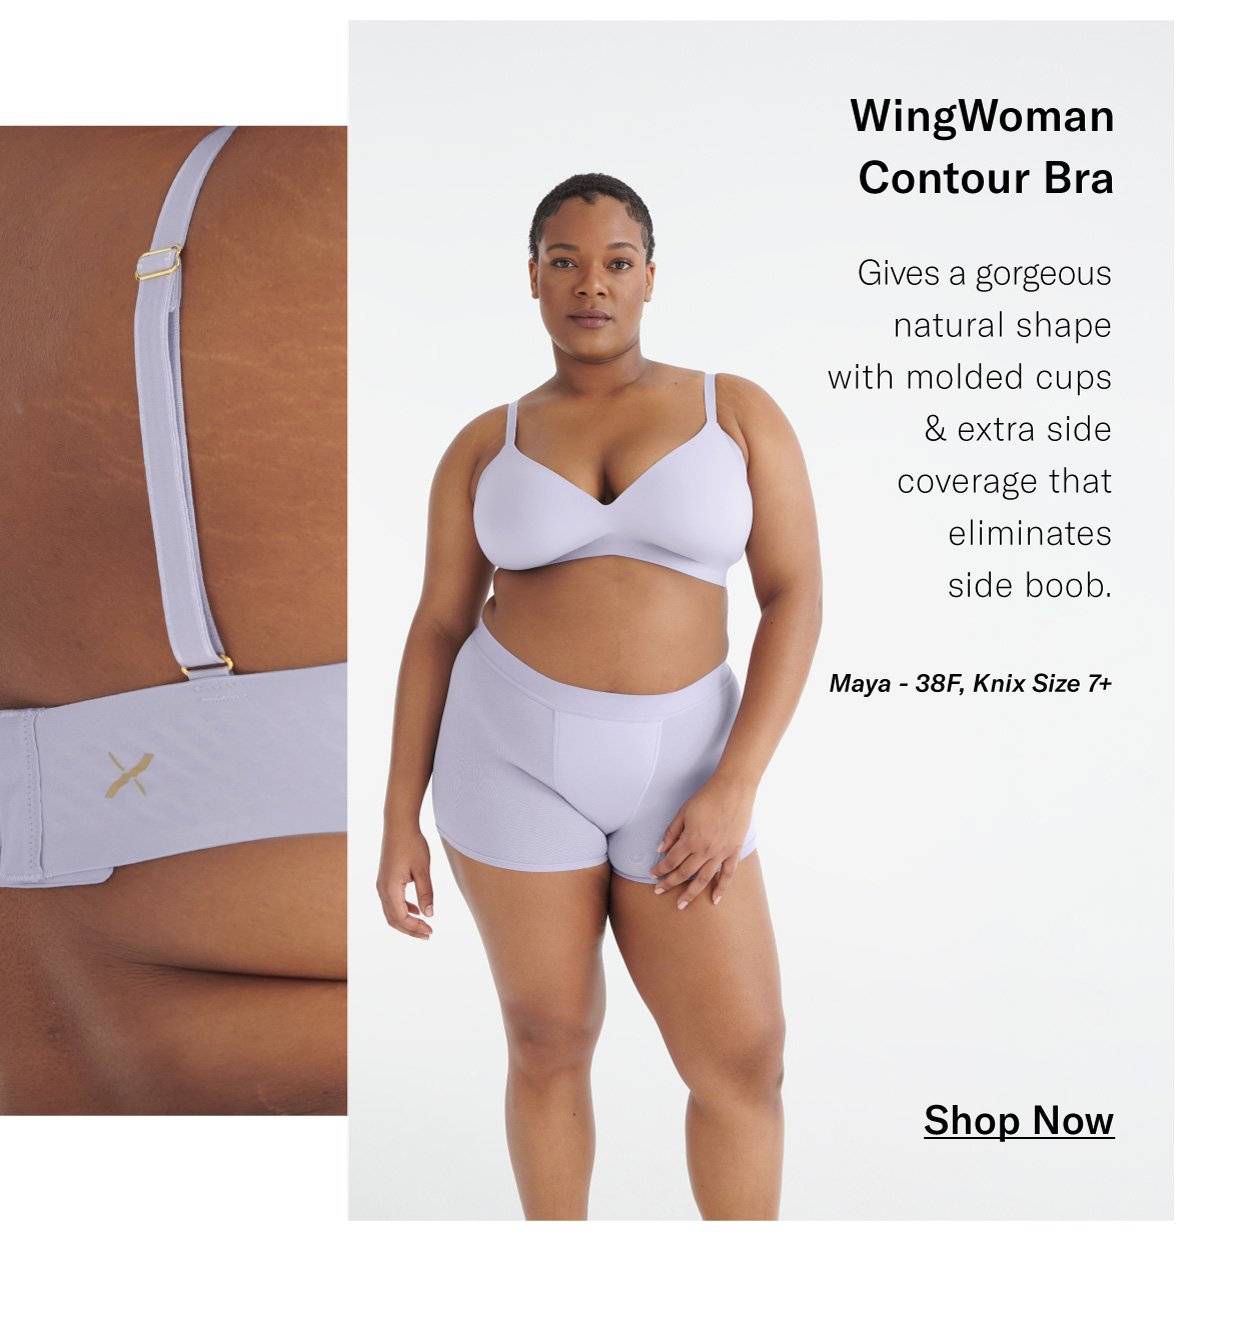 Knix: Introducing WingWoman